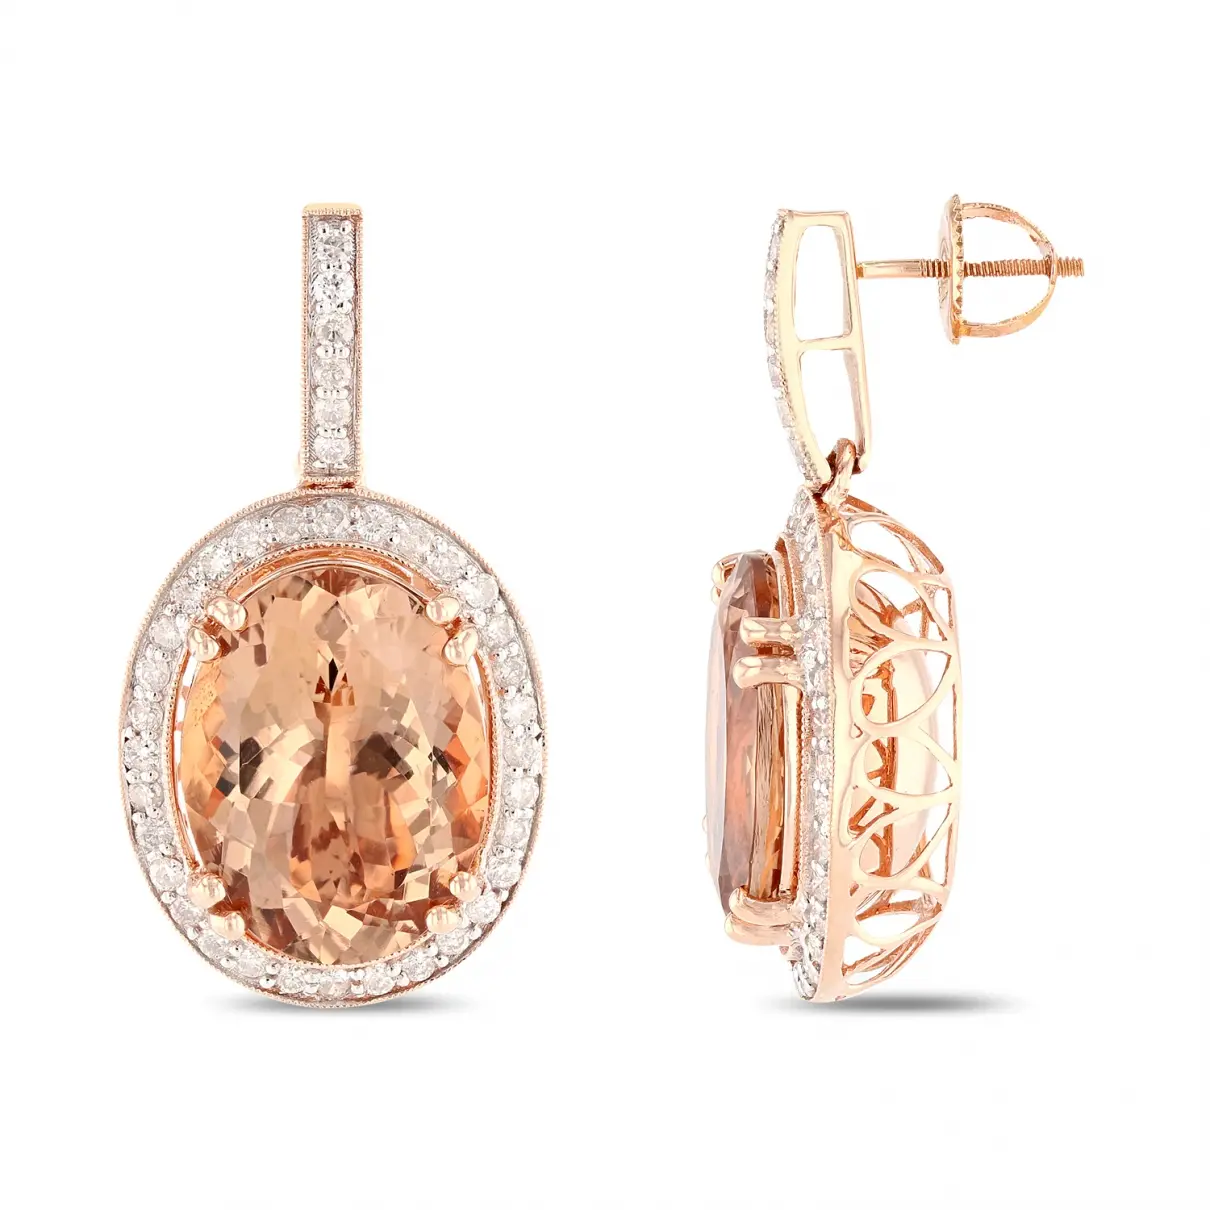 Orianne Pink gold earrings for sale